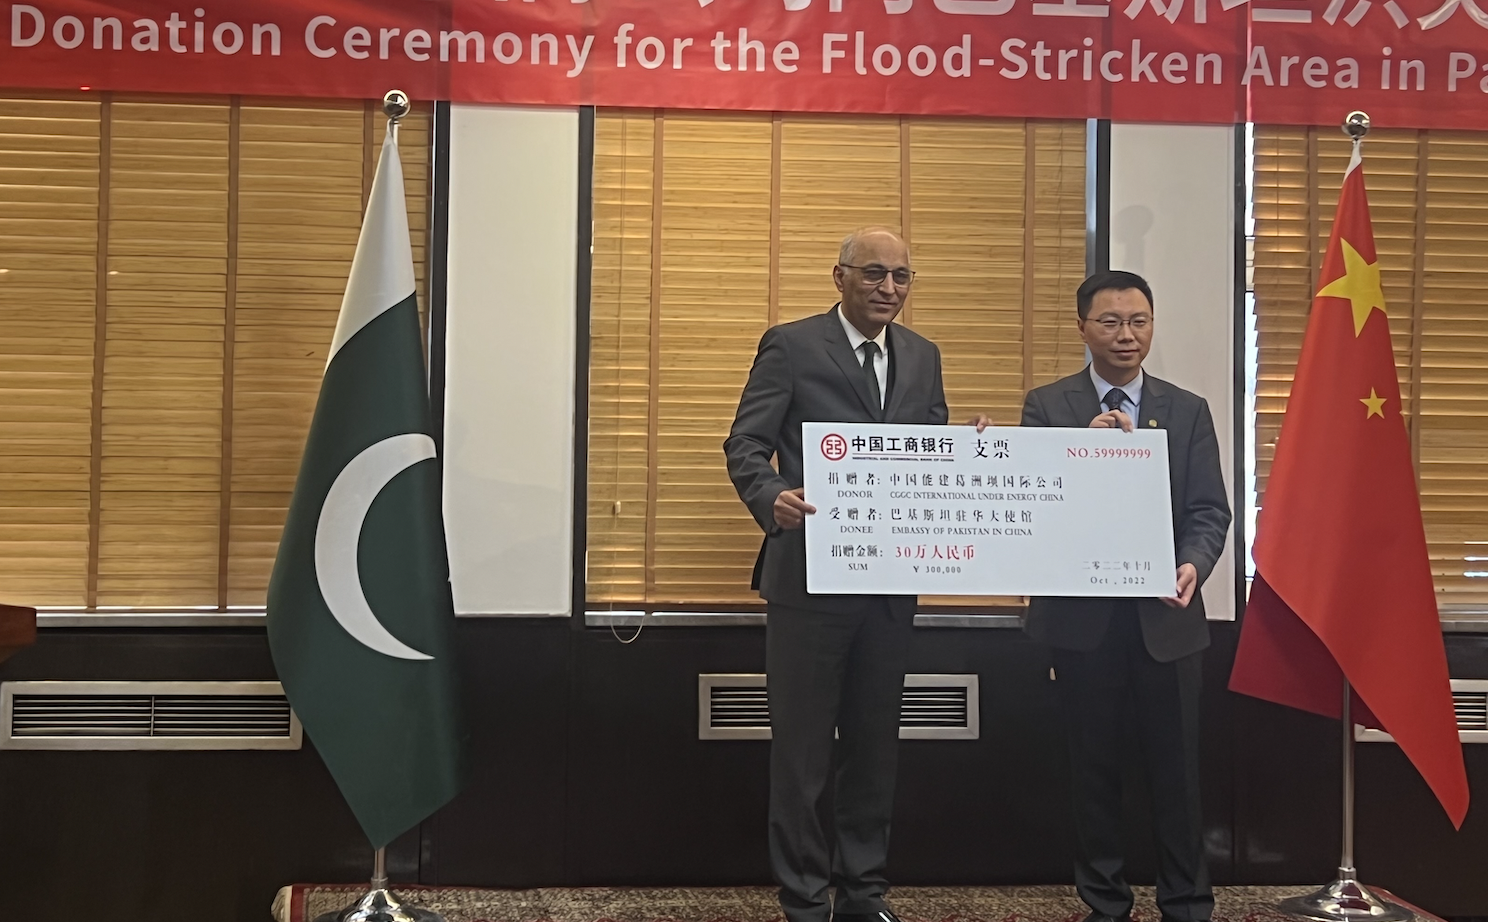 CGGC donates RMB 300,000 to Pakistan’s PM flood fund in Beijing